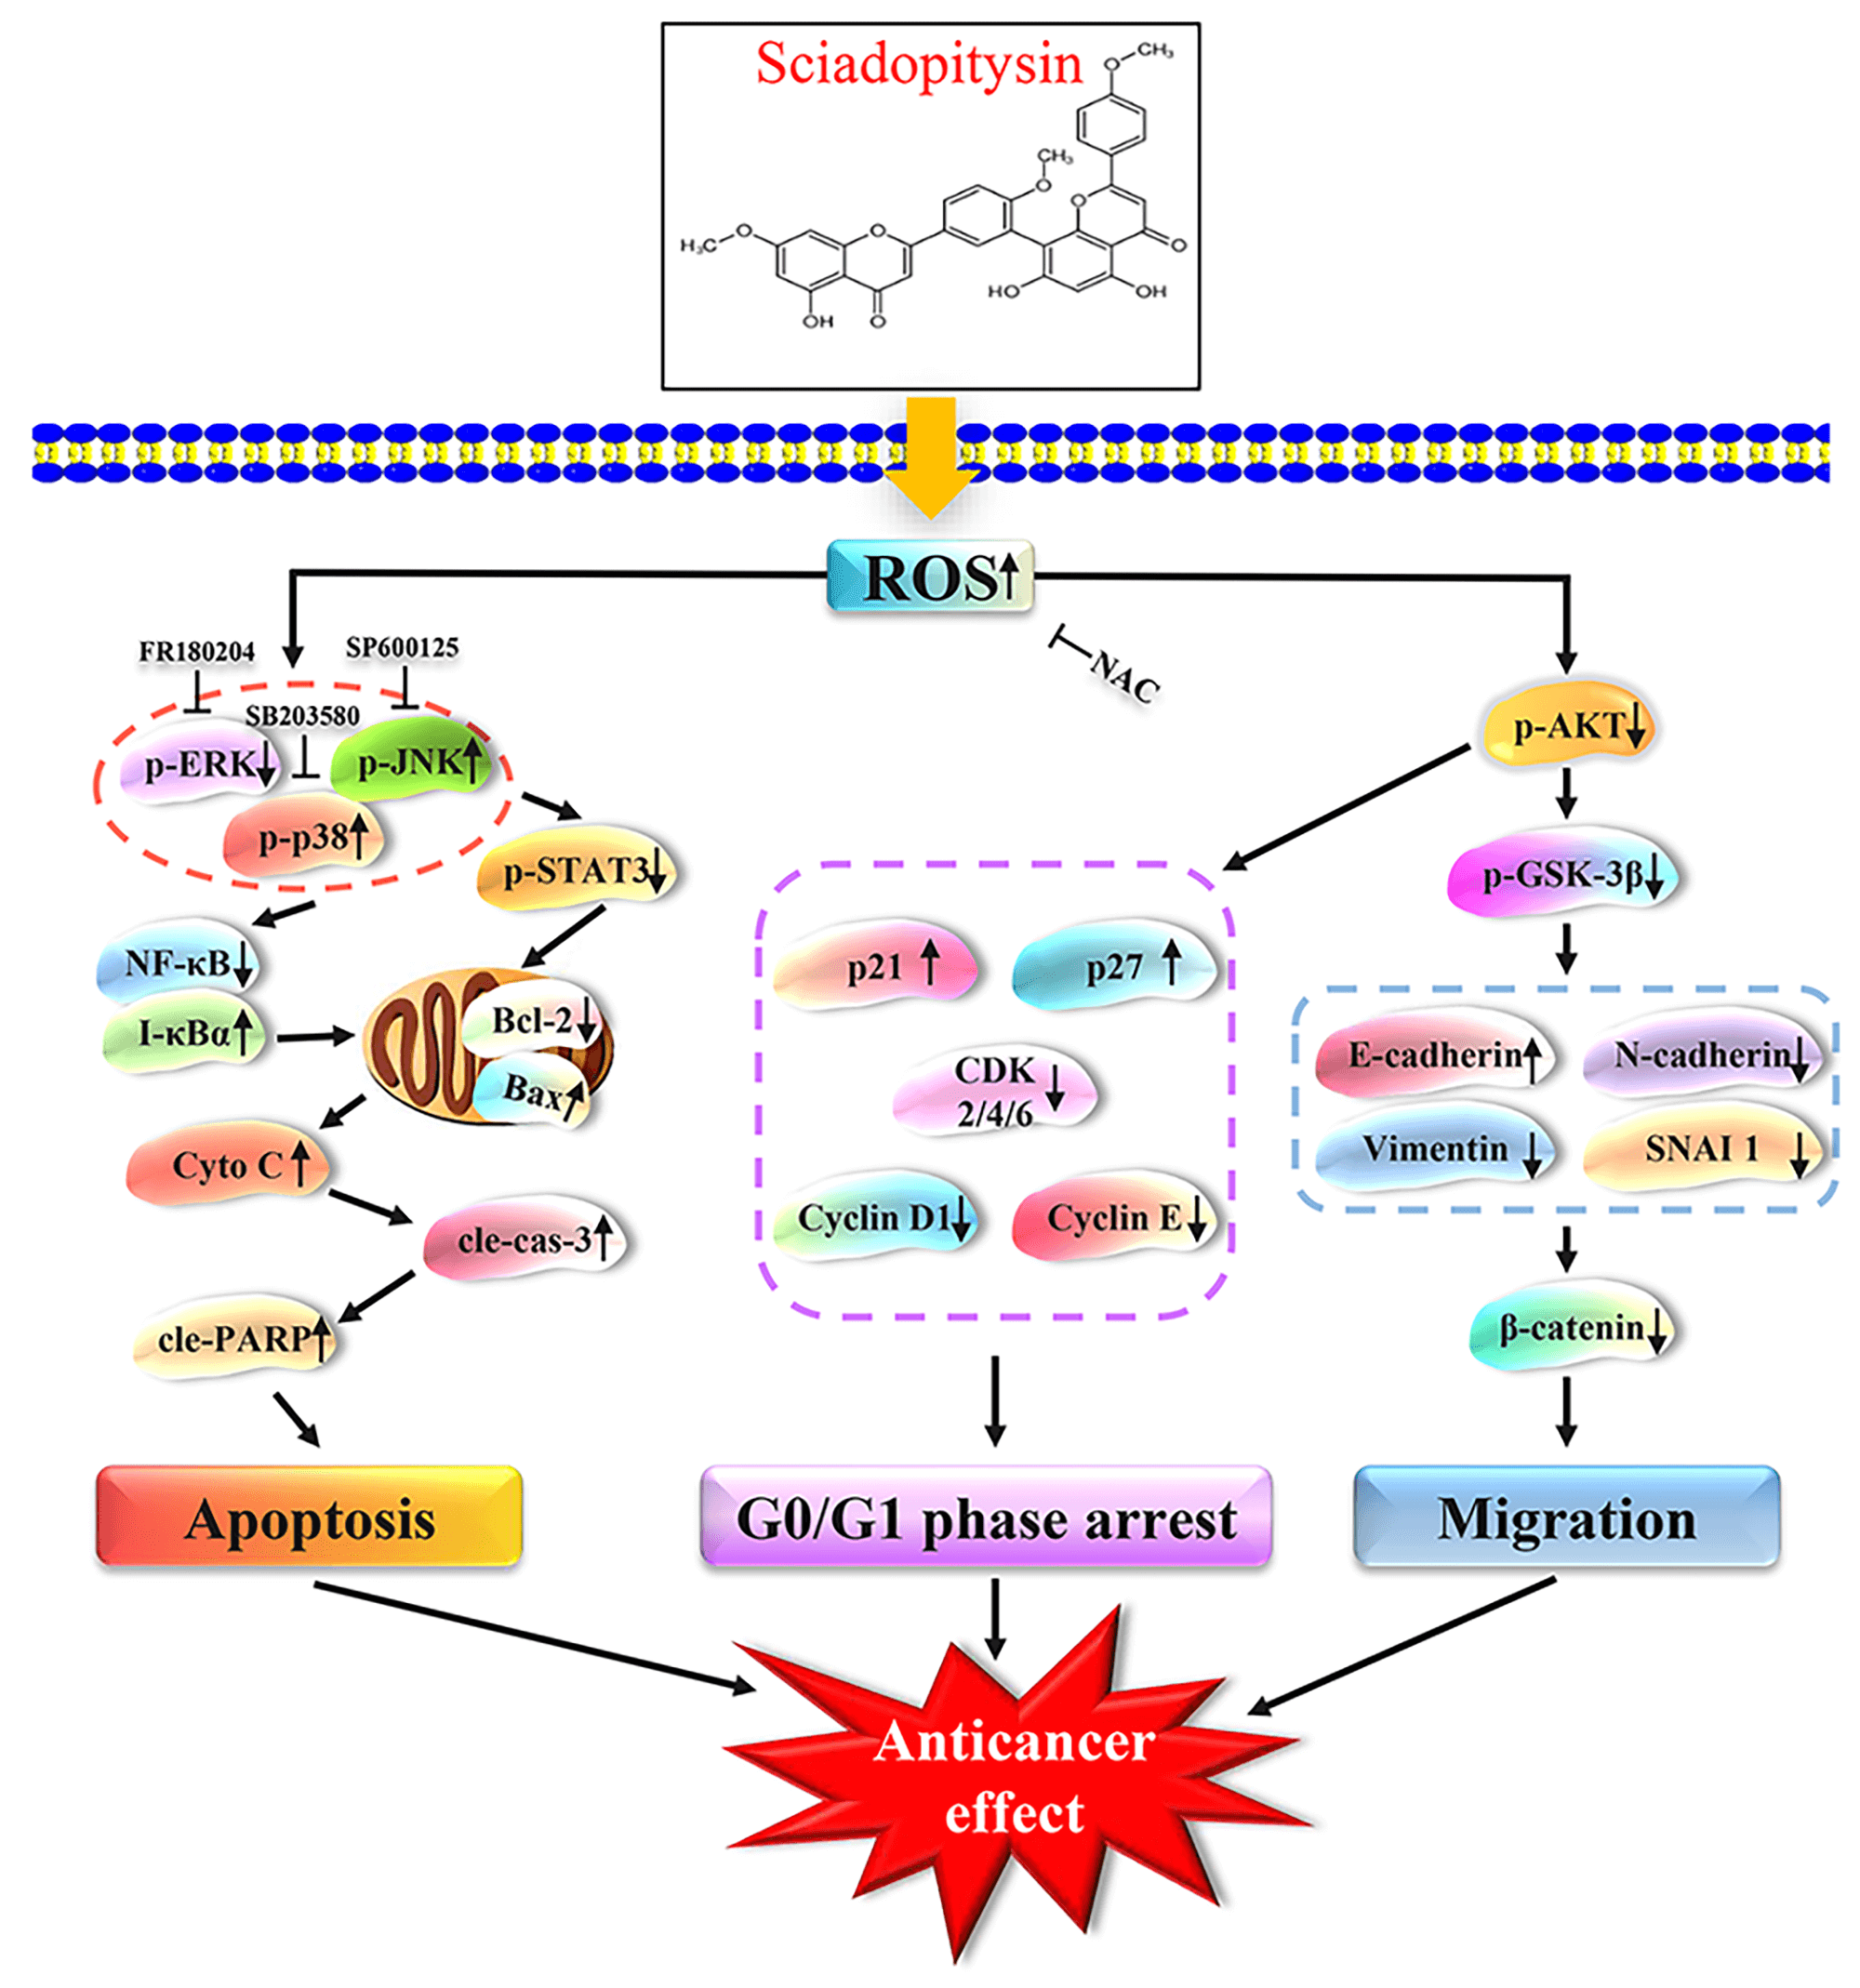 Sciadopitysin exerts anticancer effects on HepG2 hepatocellular carcinoma cells by regulating reactive oxygen species-mediated signaling pathways